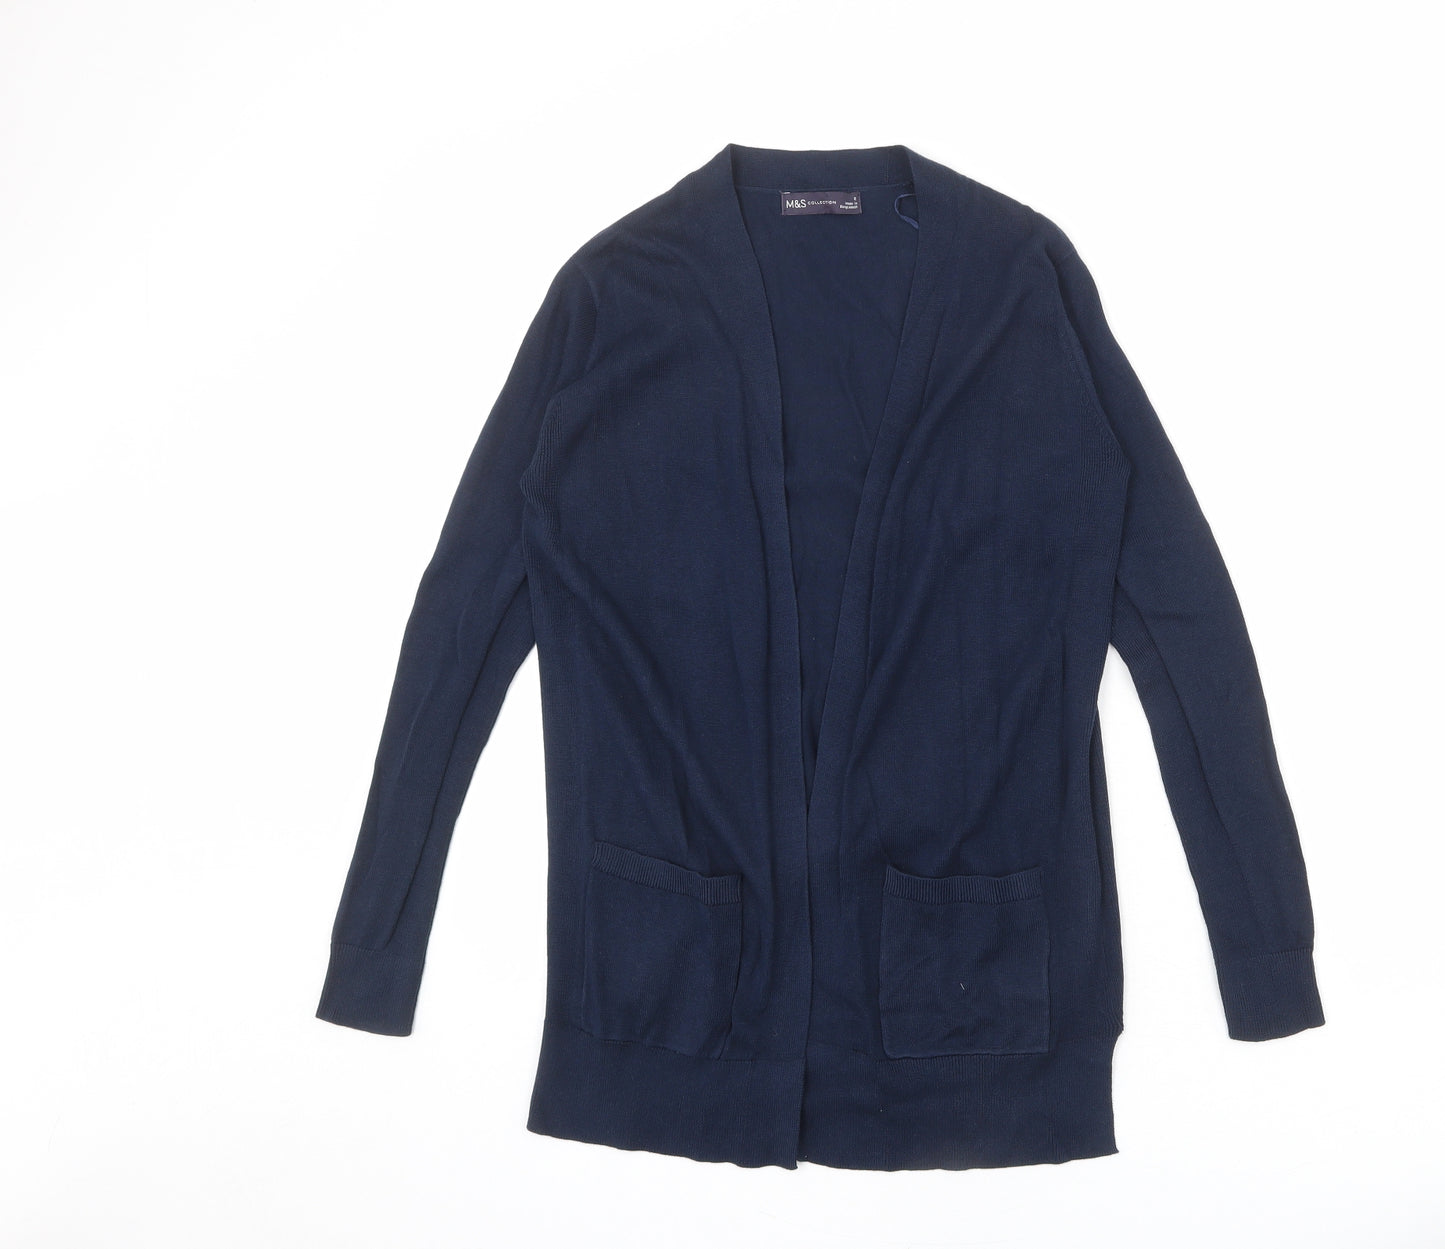 Marks and Spencer Womens Blue V-Neck 100% Cotton Cardigan Jumper Size 8